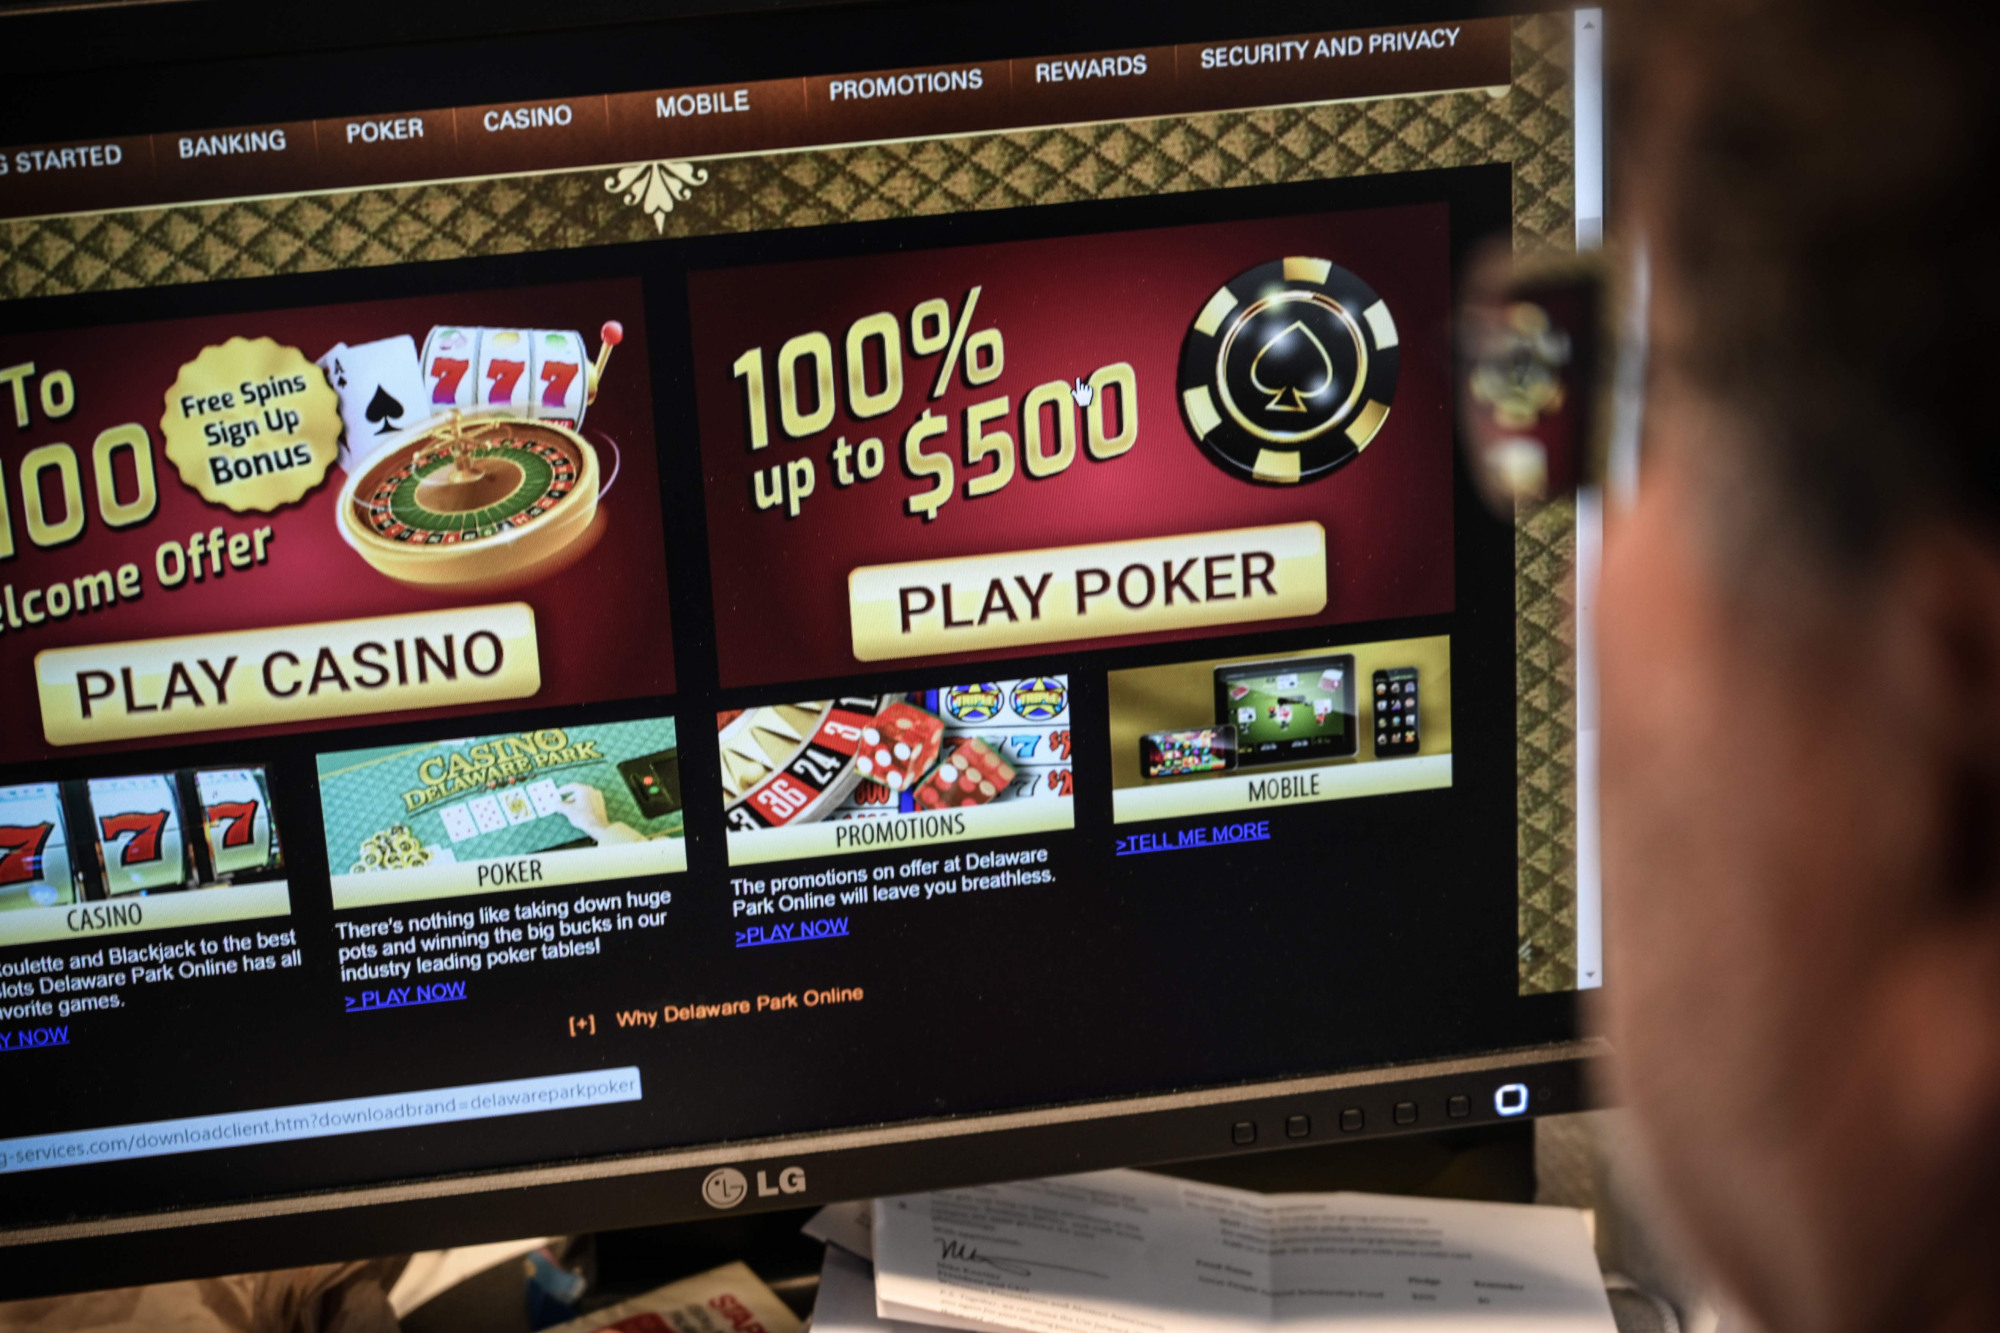 All Online Casino